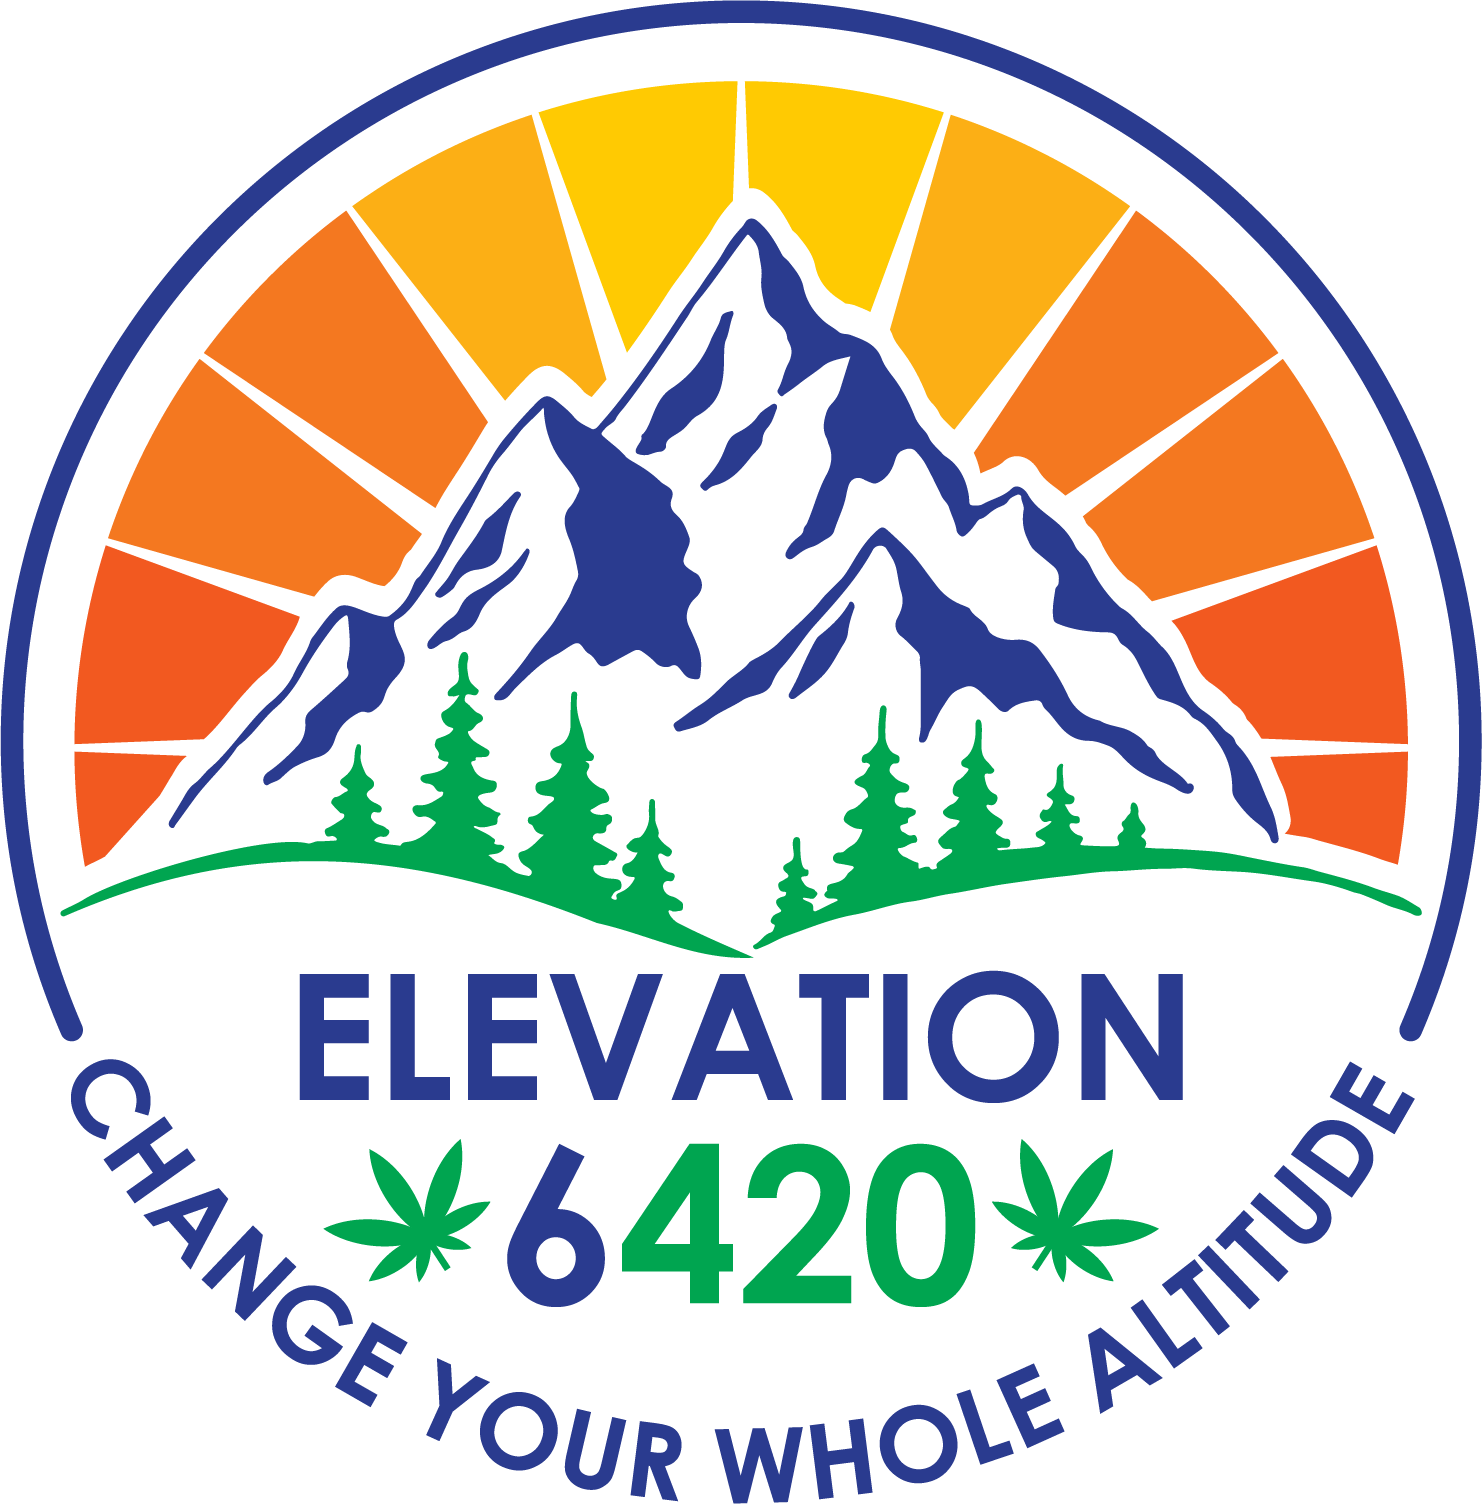 Elevation 6420 logo